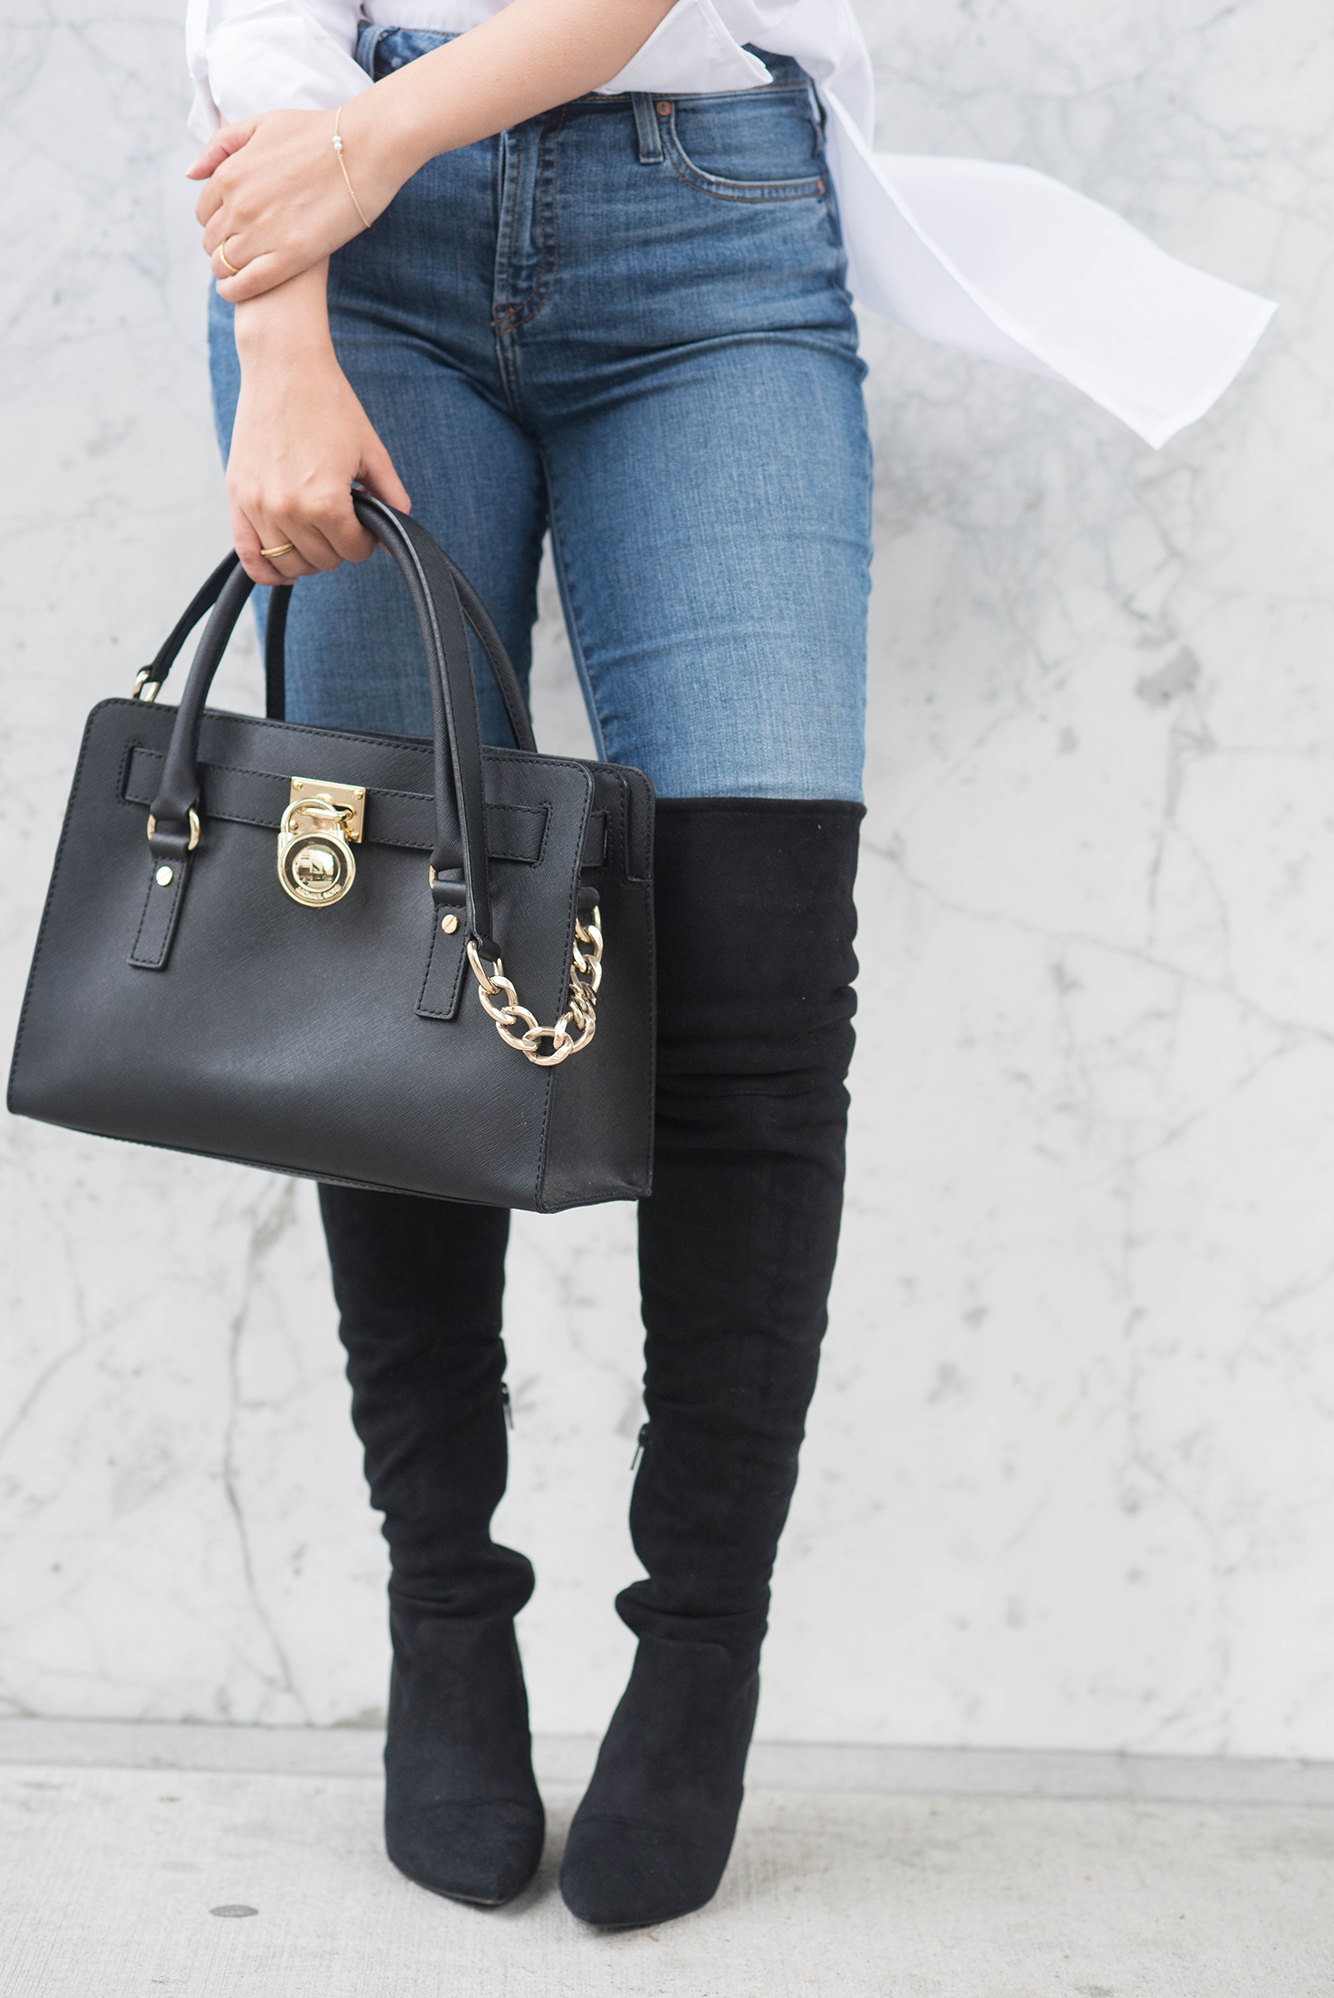 coco-and-vera-top-vancouver-fashion-blog-top-canadian-fashion-blog-top-blogger-outfit-details-marled-blouse-the-castings-jeans-aldo-otk-boots-keltie-leanne-designs-bracelet-michael-kors-bag